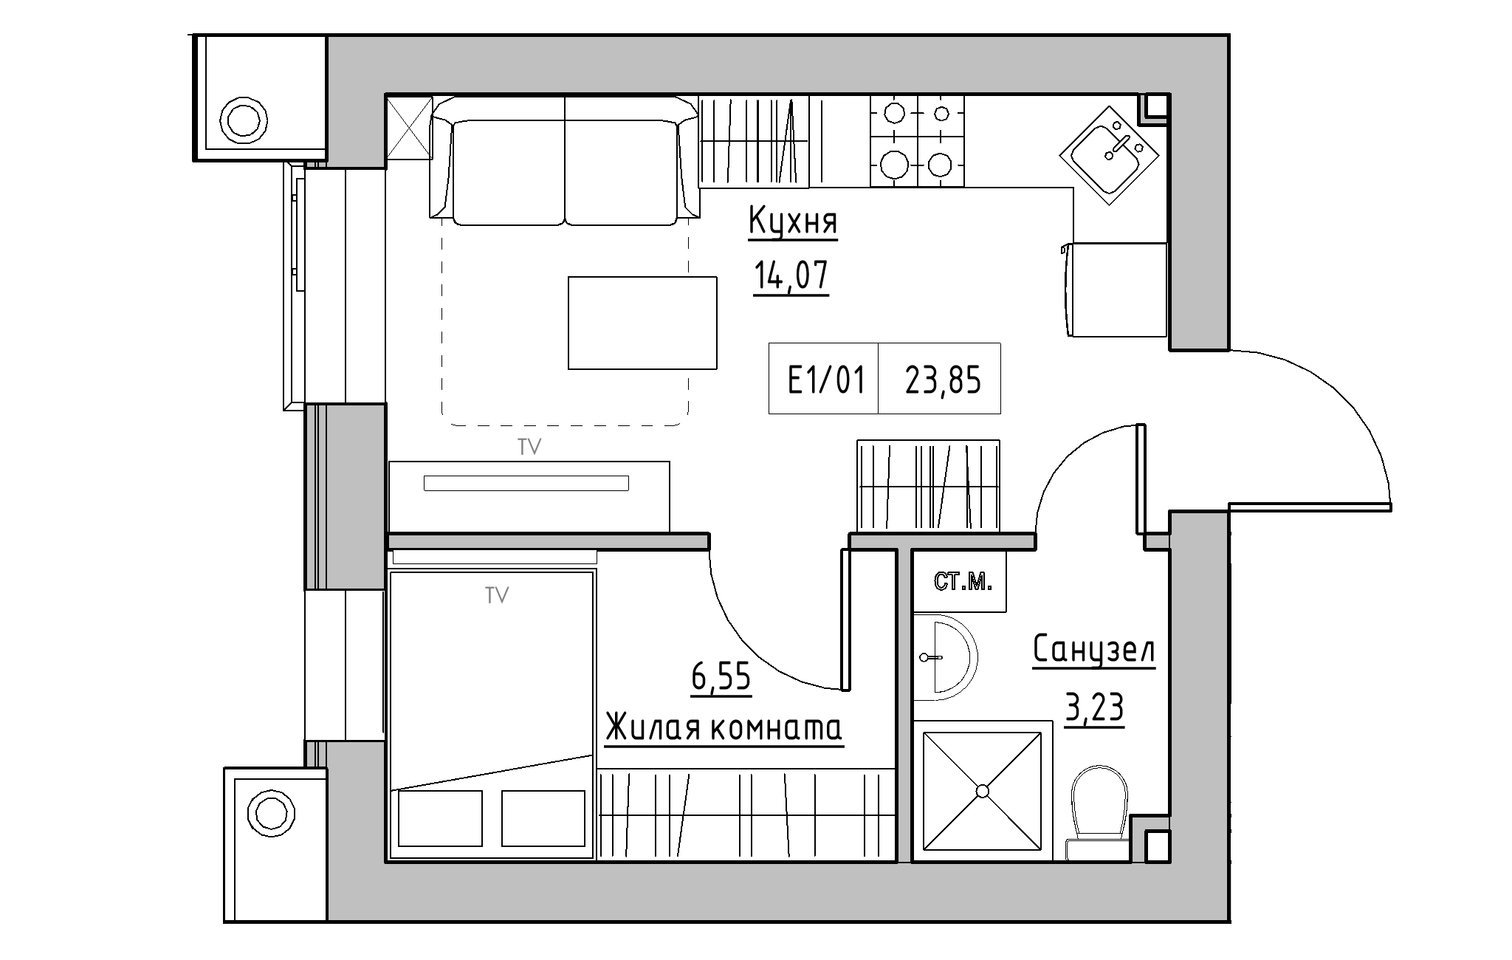 Planning 1-rm flats area 23.85m2, KS-013-03/0003.